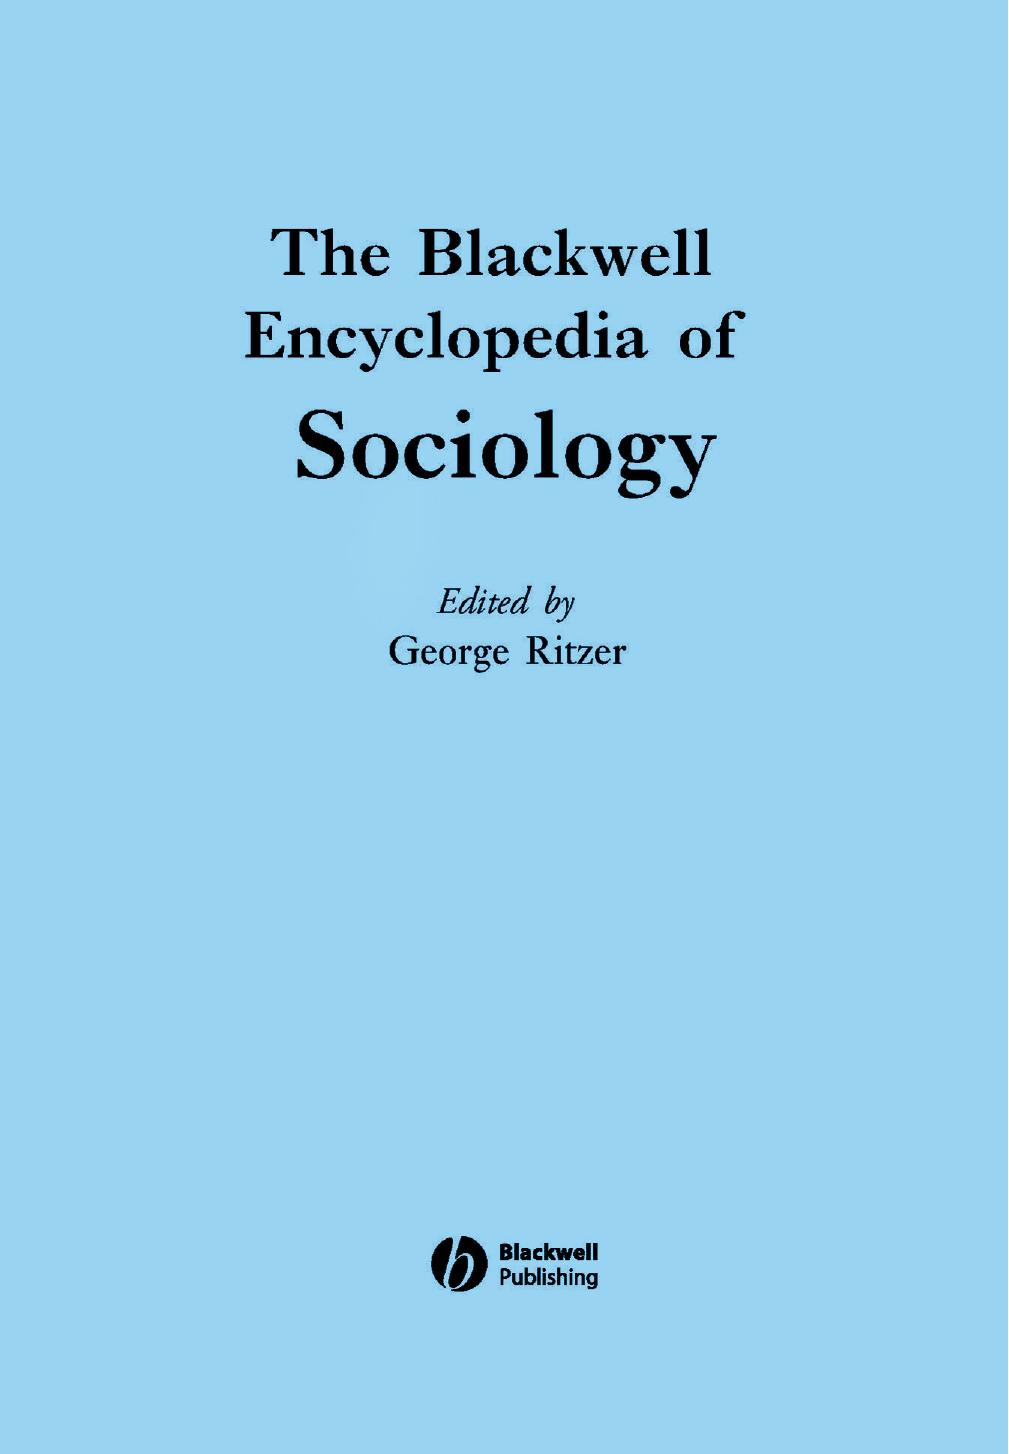 The Blackwell Encyclopedia of Sociology, 11 Volume Set